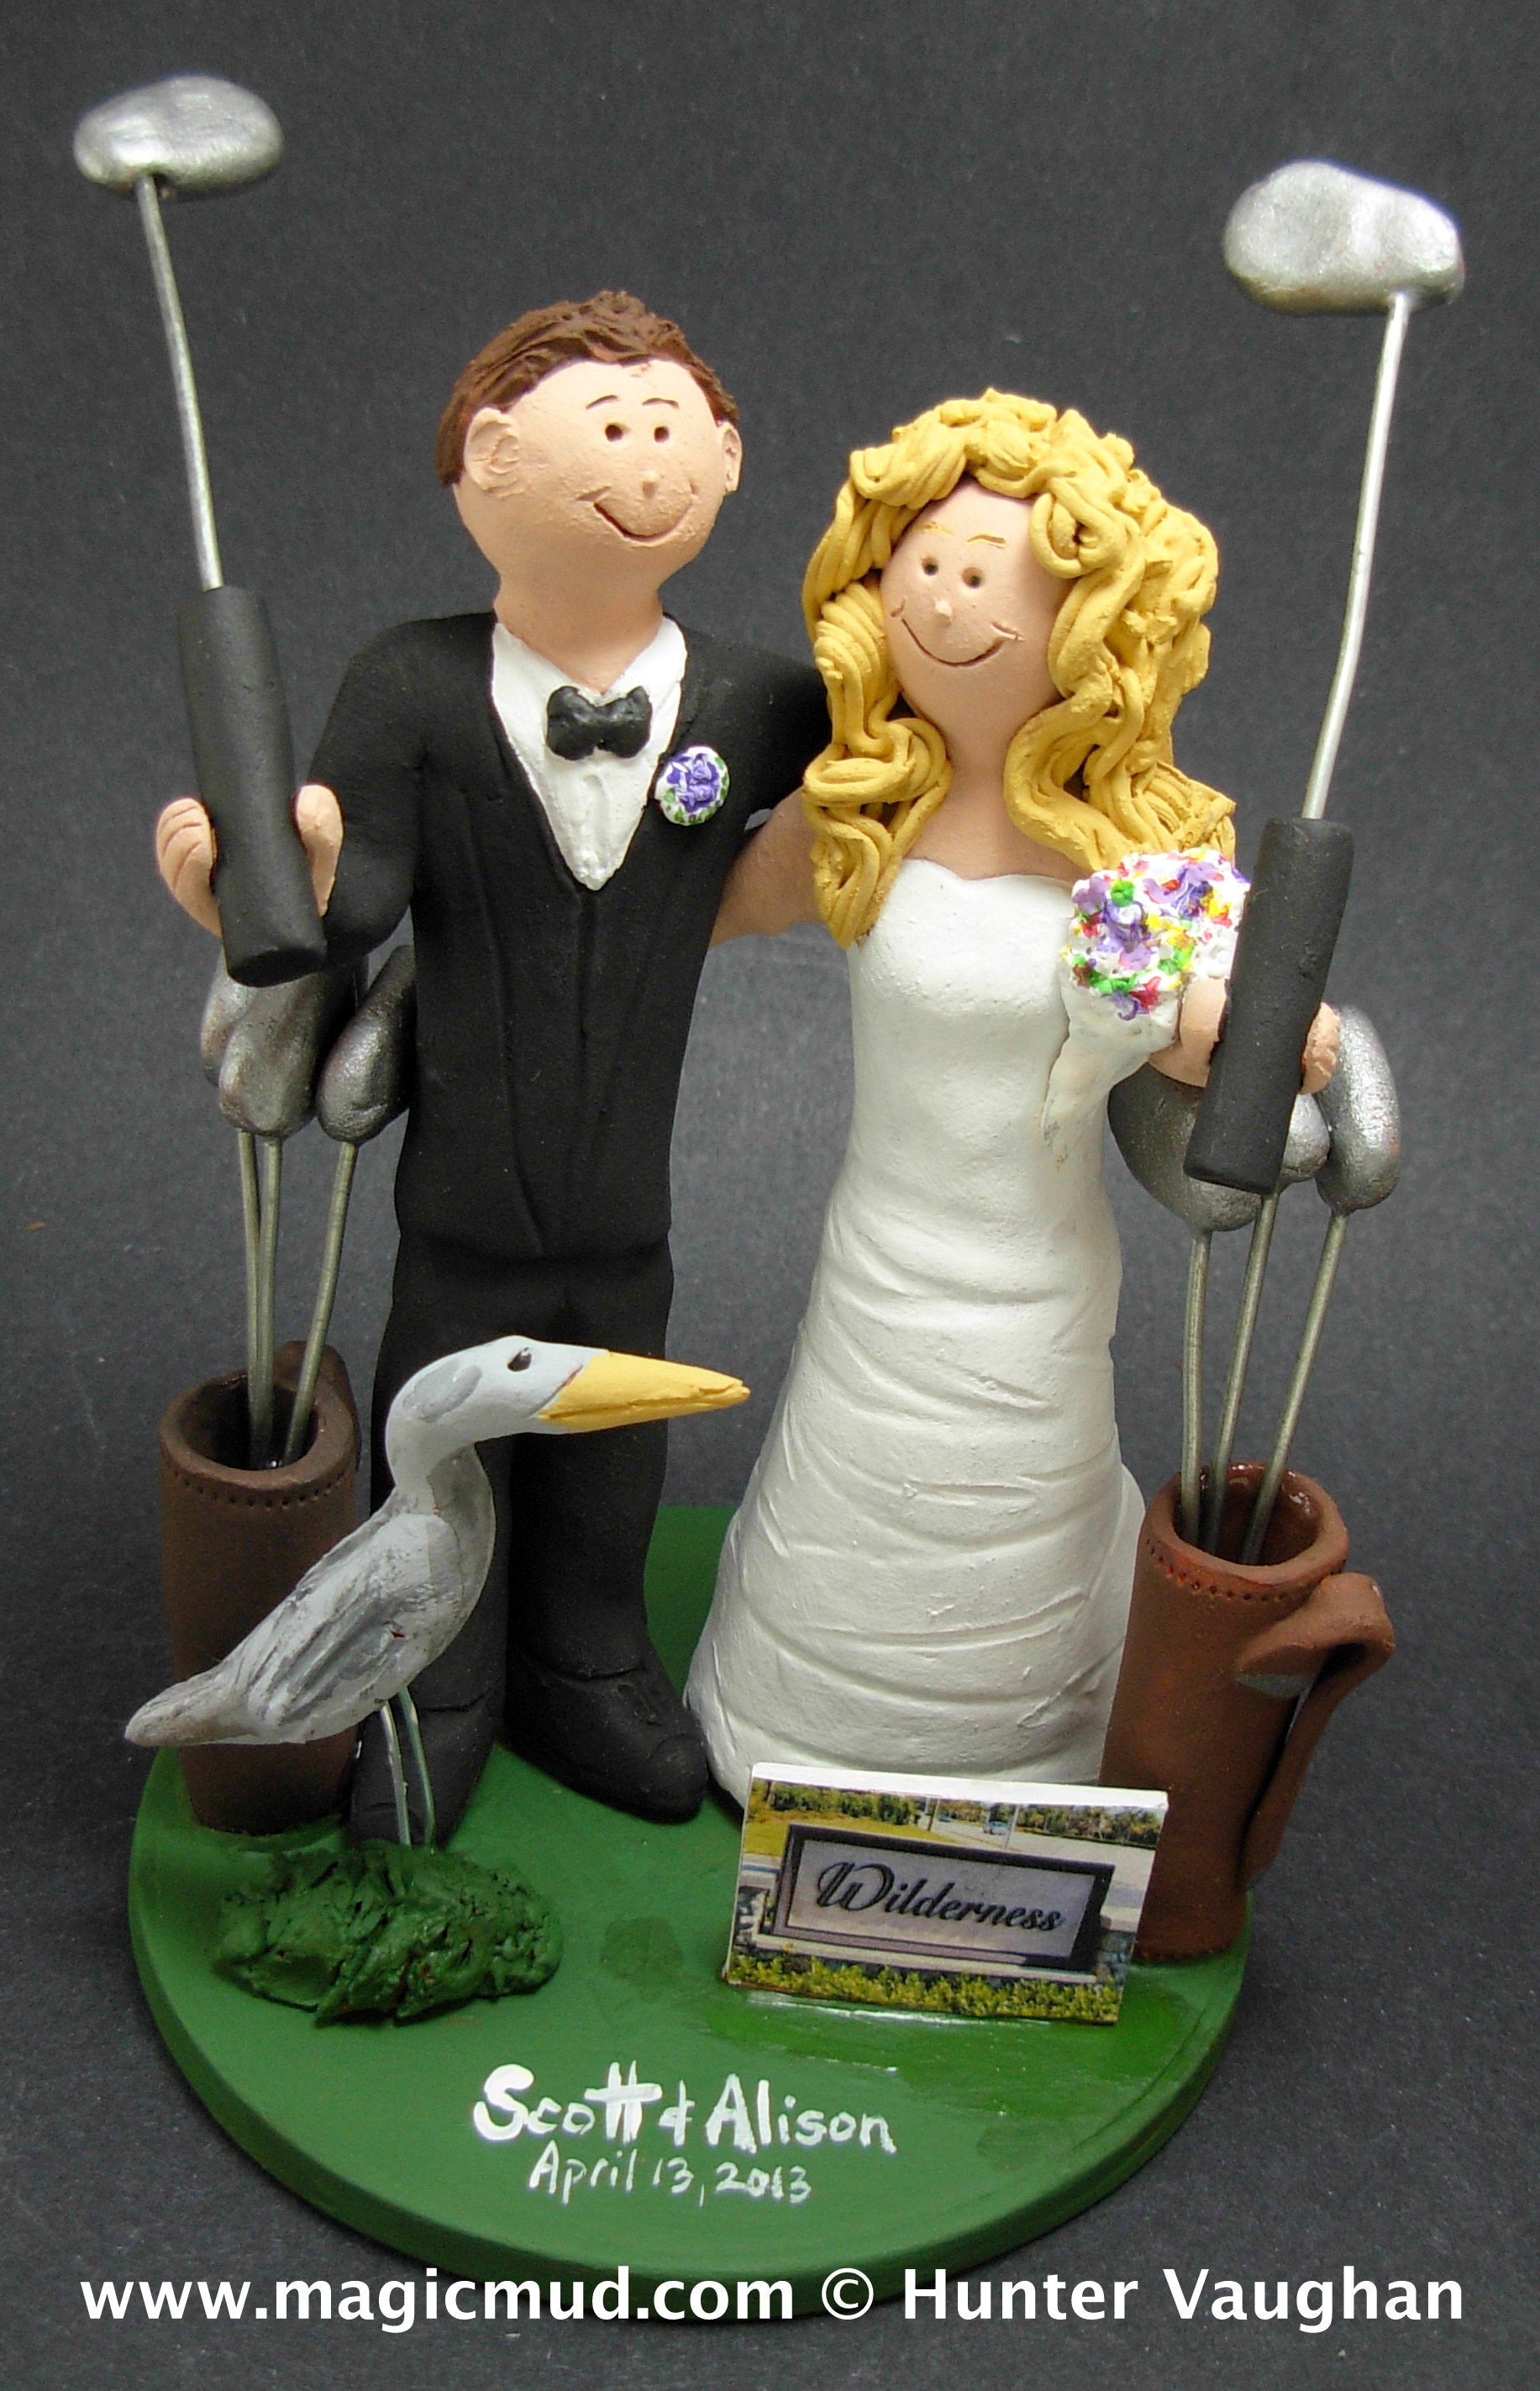 Golfing Wedding Cake Toppers, Custom Made Golfers Wedding Cake Topper –  CustomWeddingCakeToppers